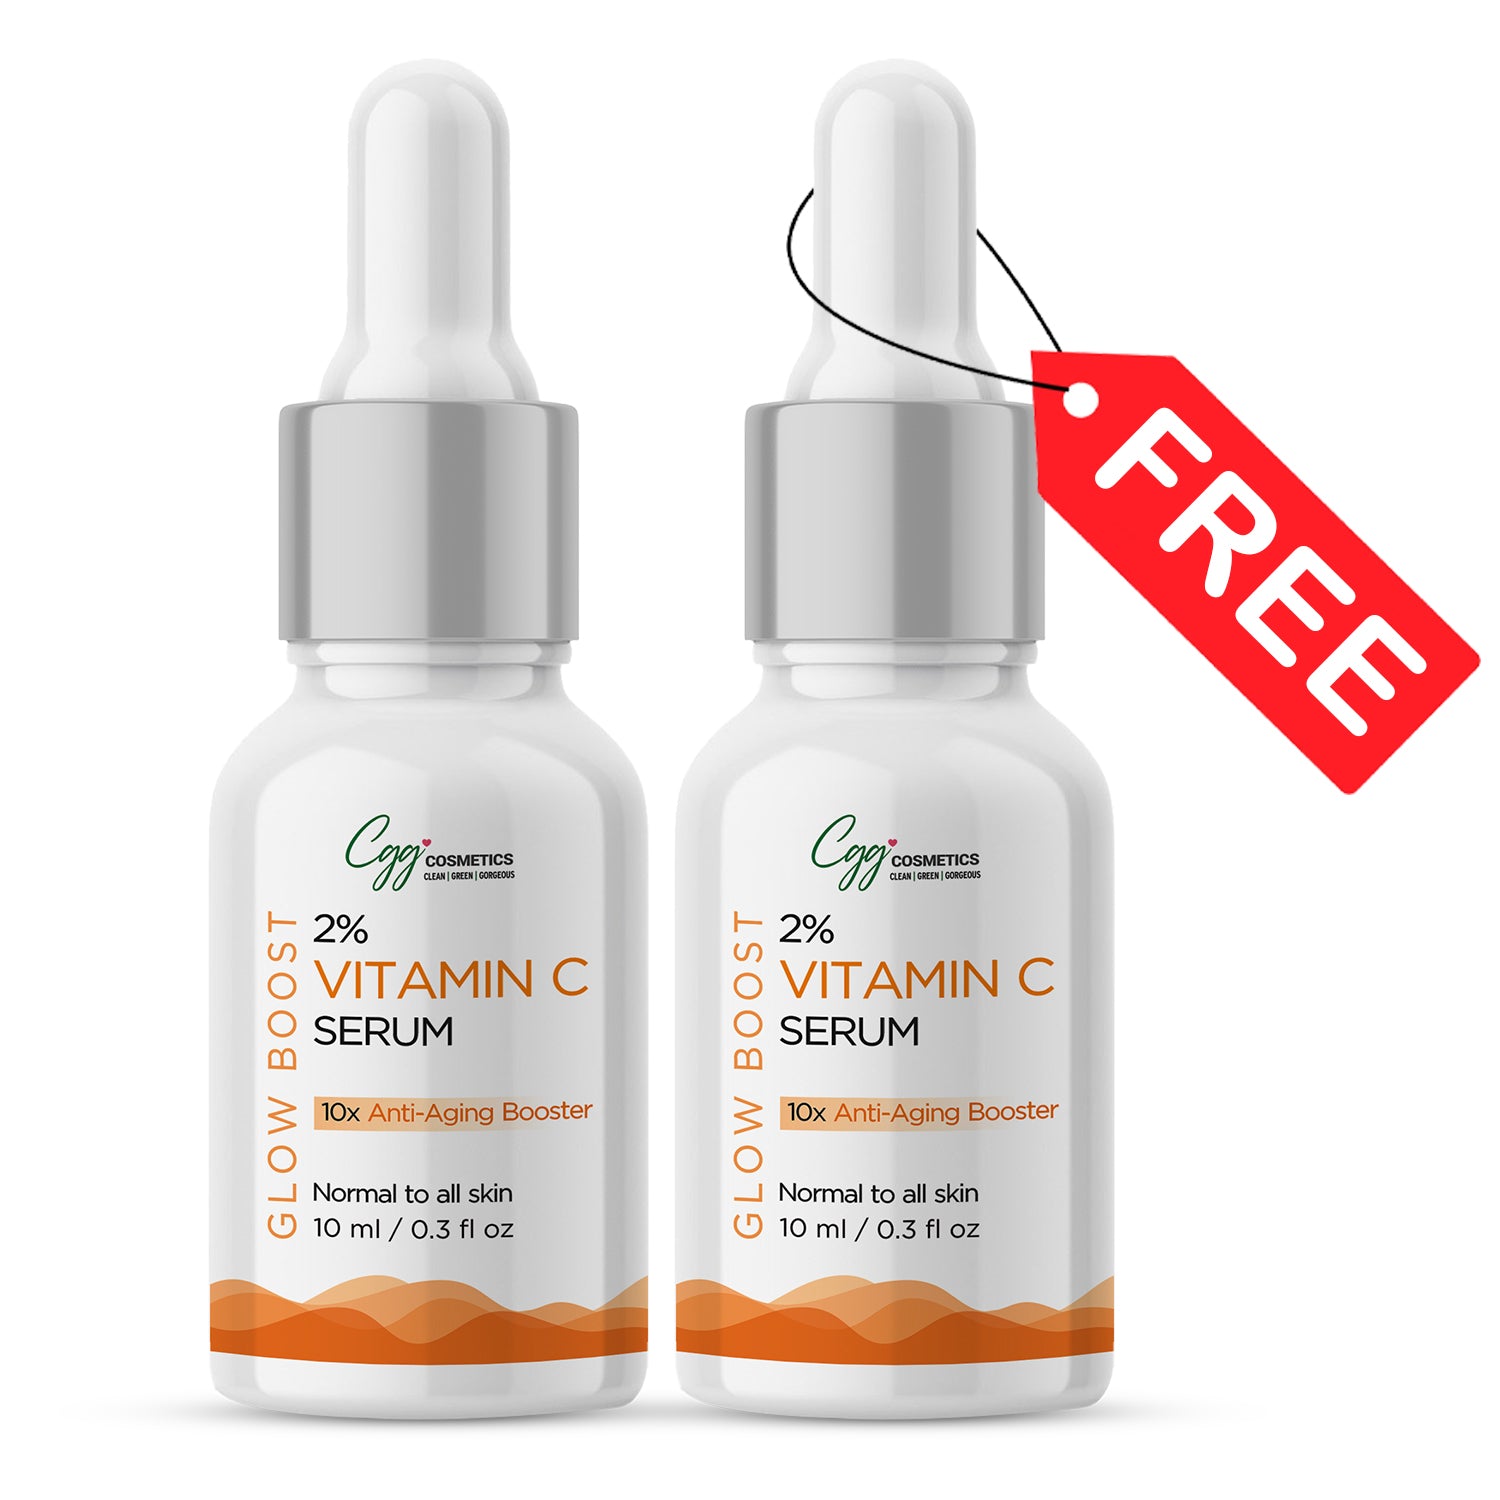 CGG Cosmetics 2% Vitamin C Serum 10ml & GET FREE 10ml 2% Vitamin C Serum - 10X Anti-Aging Booster